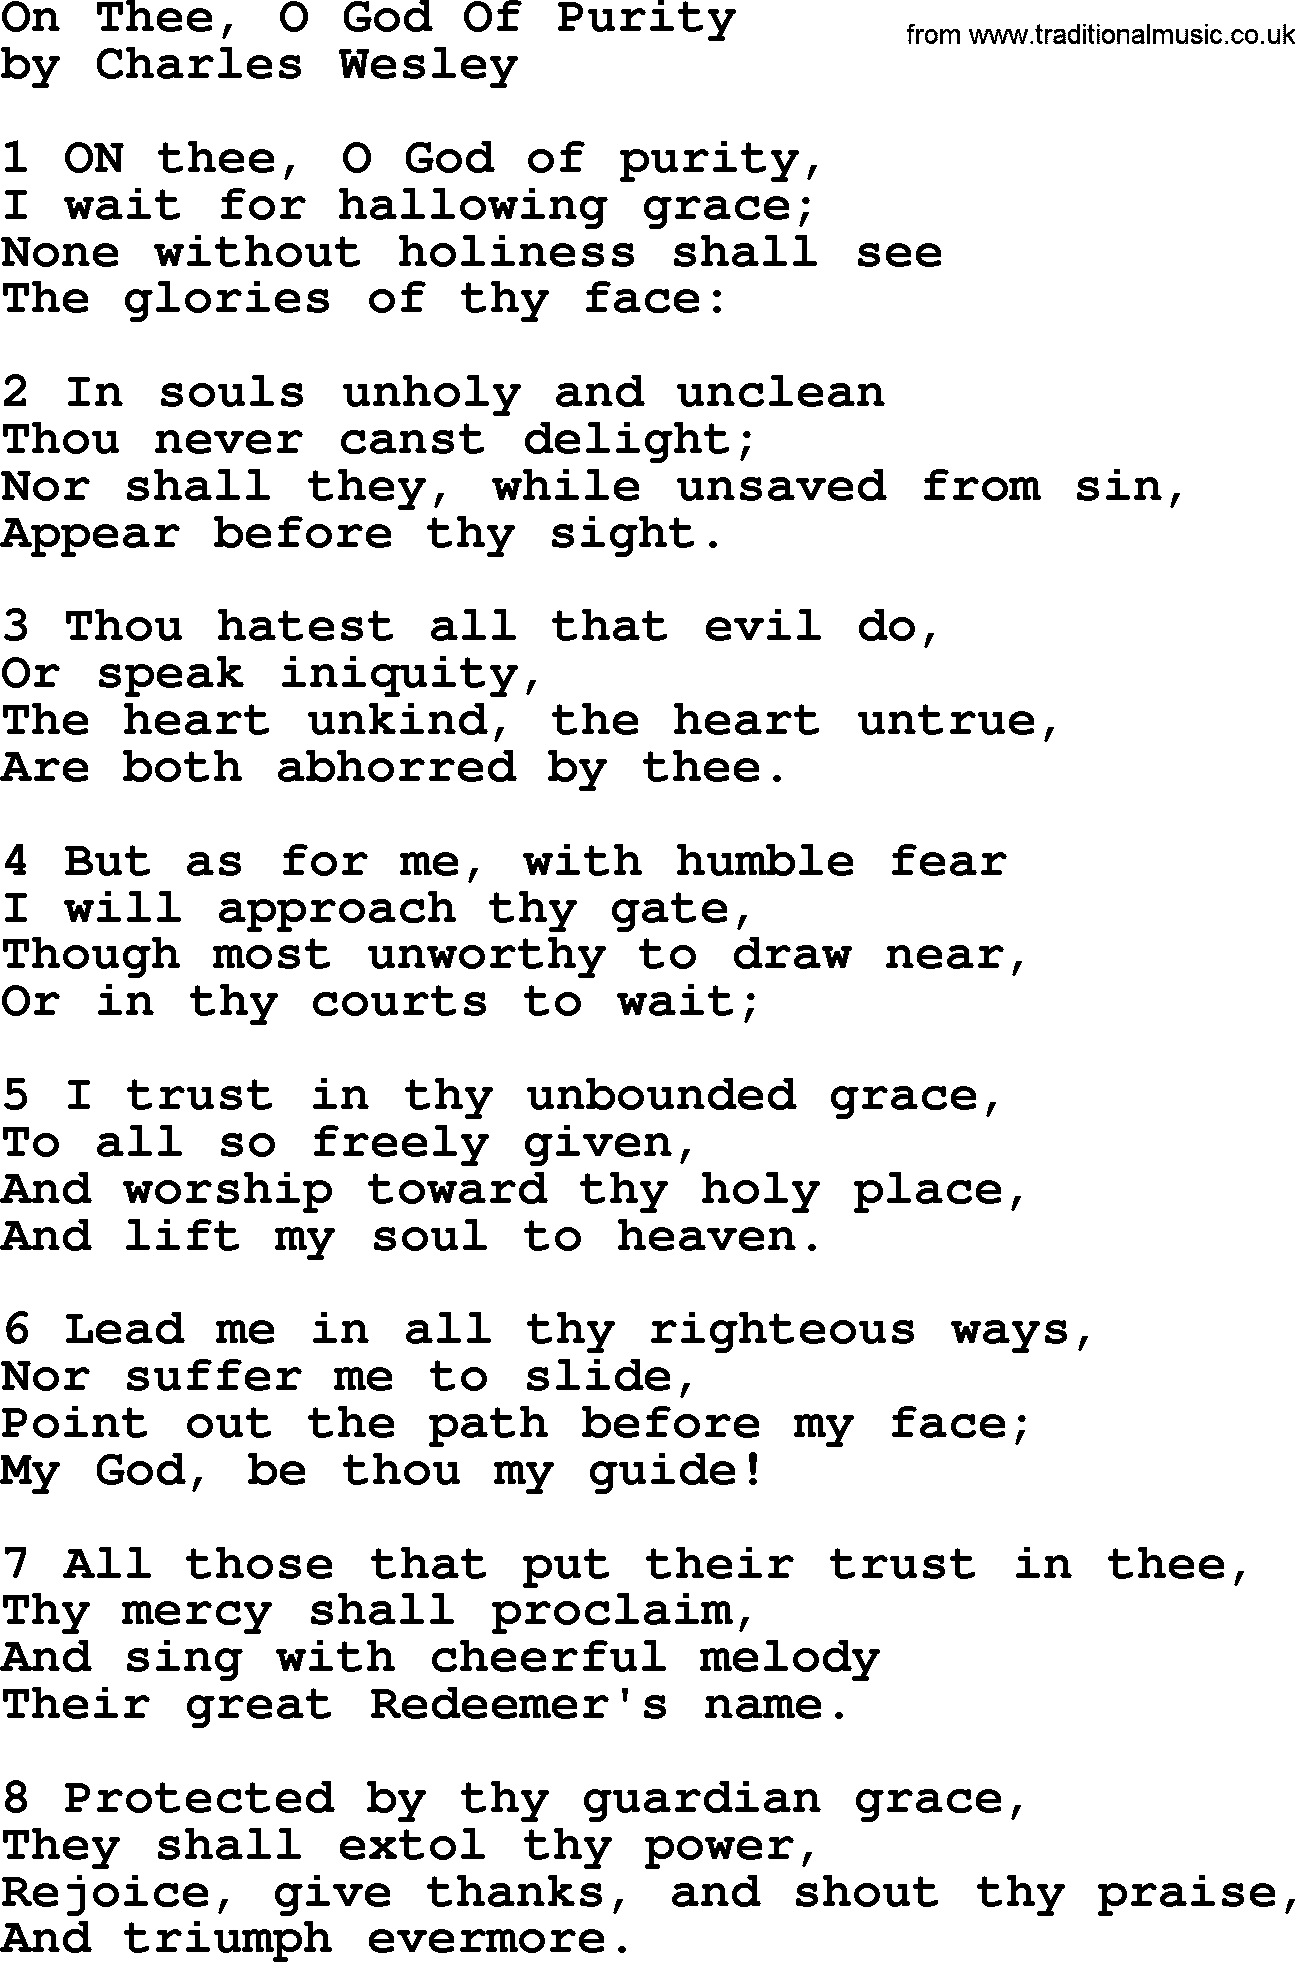 Charles Wesley hymn: On Thee, O God Of Purity, lyrics